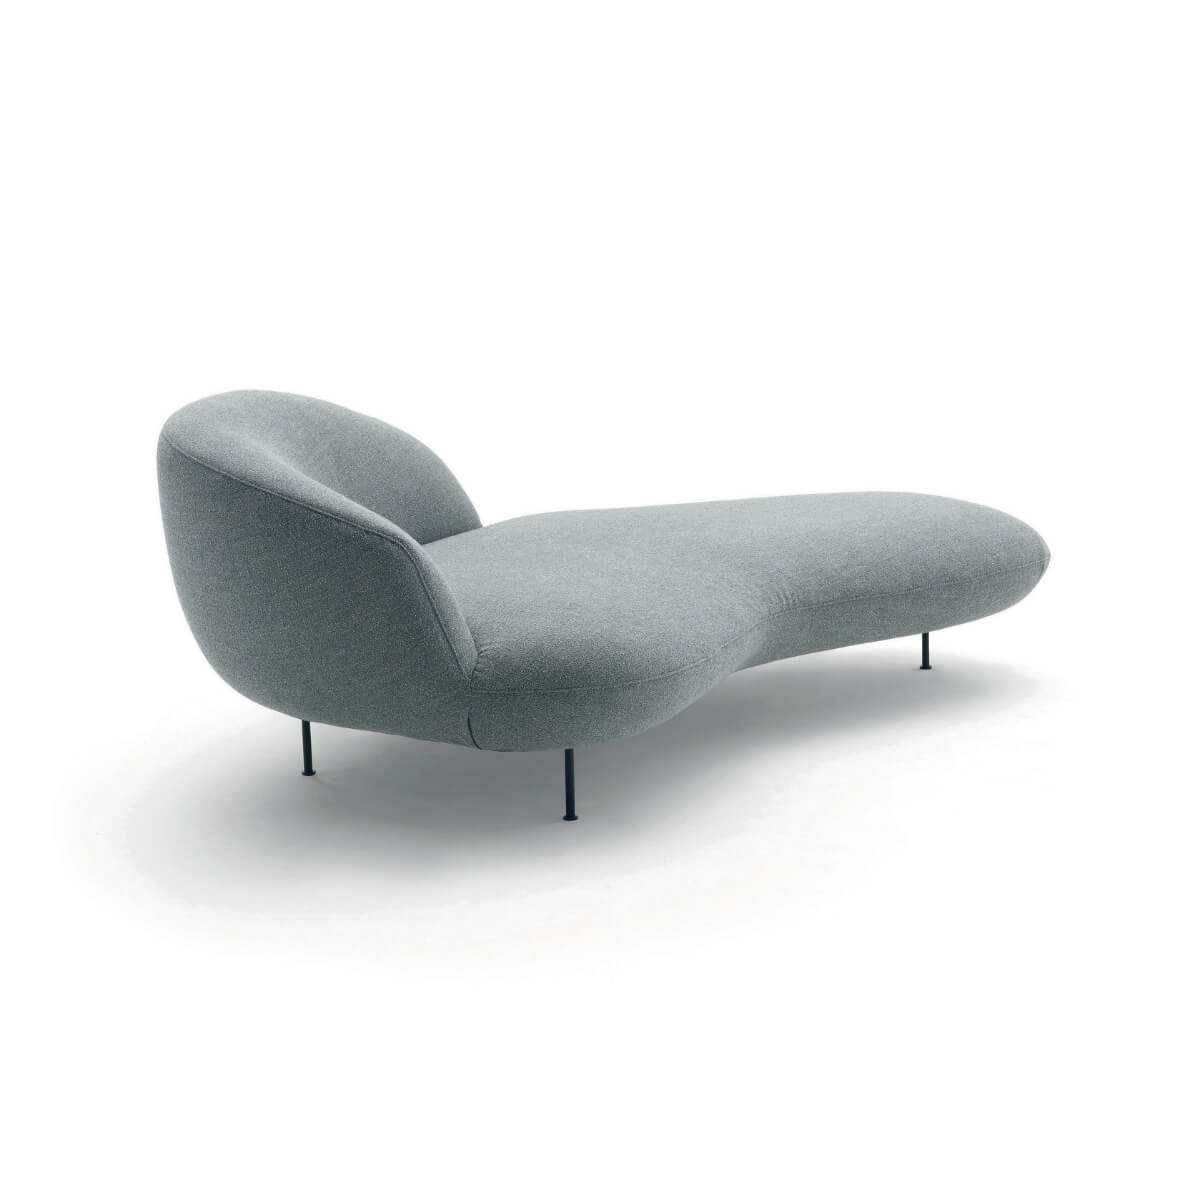 The SootheNest Cotton Linen Lounge Chair: A Serene Escape